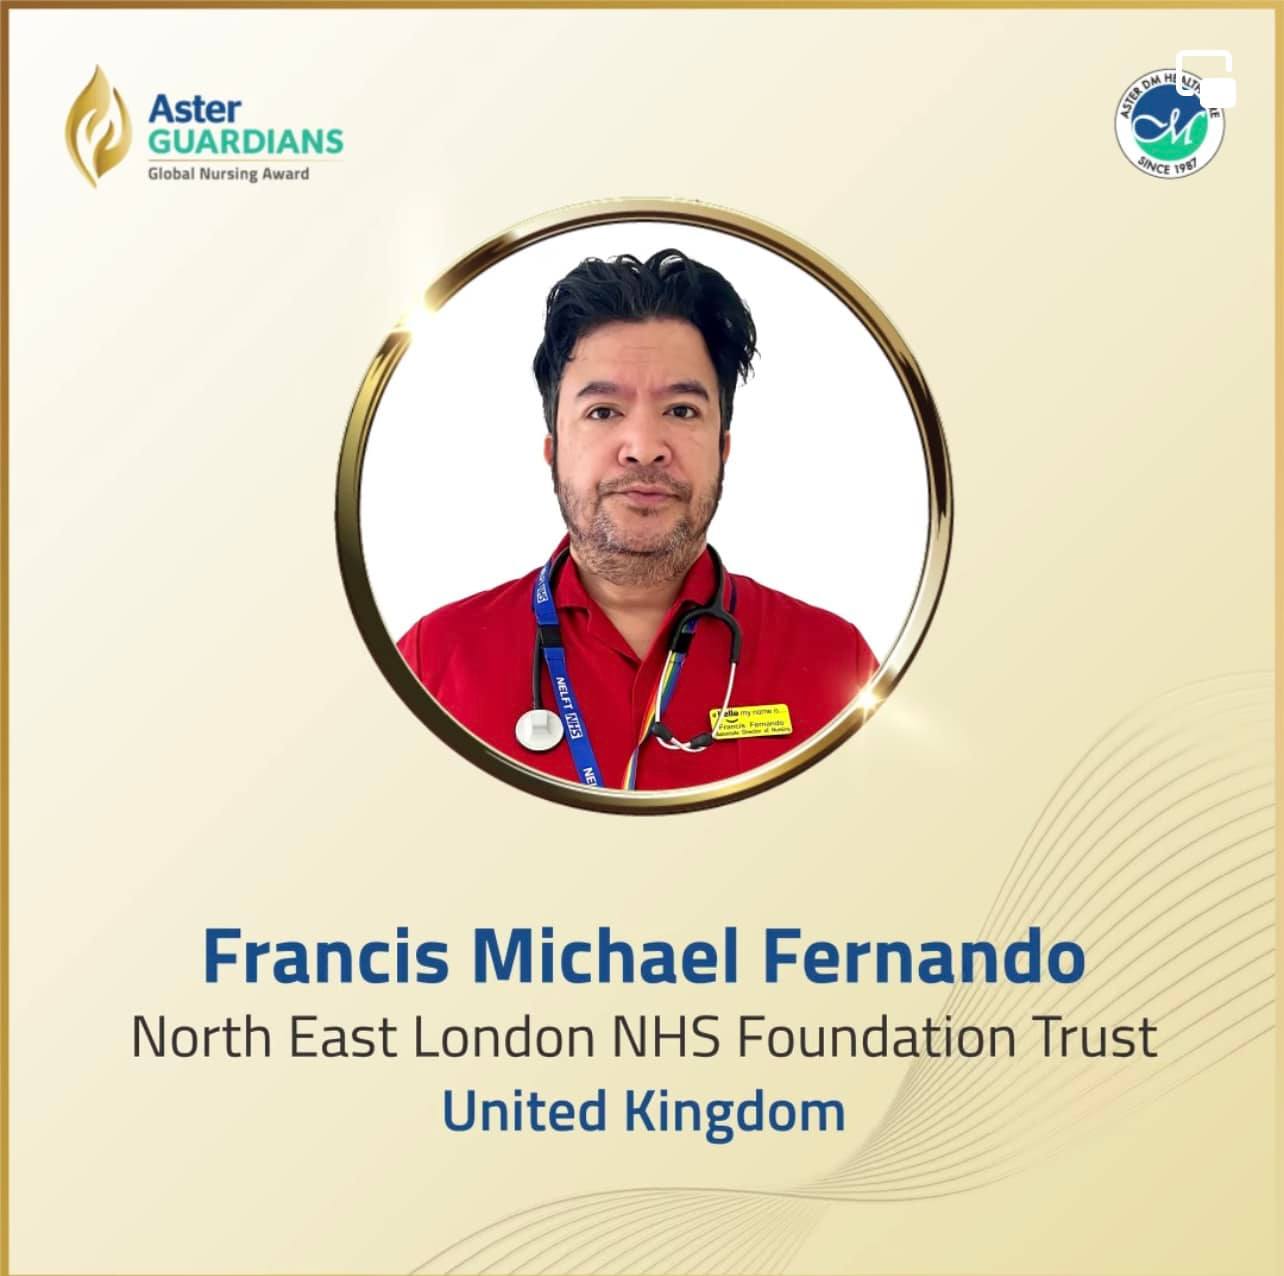 Francis Michael Fernando Global Nursing finalist